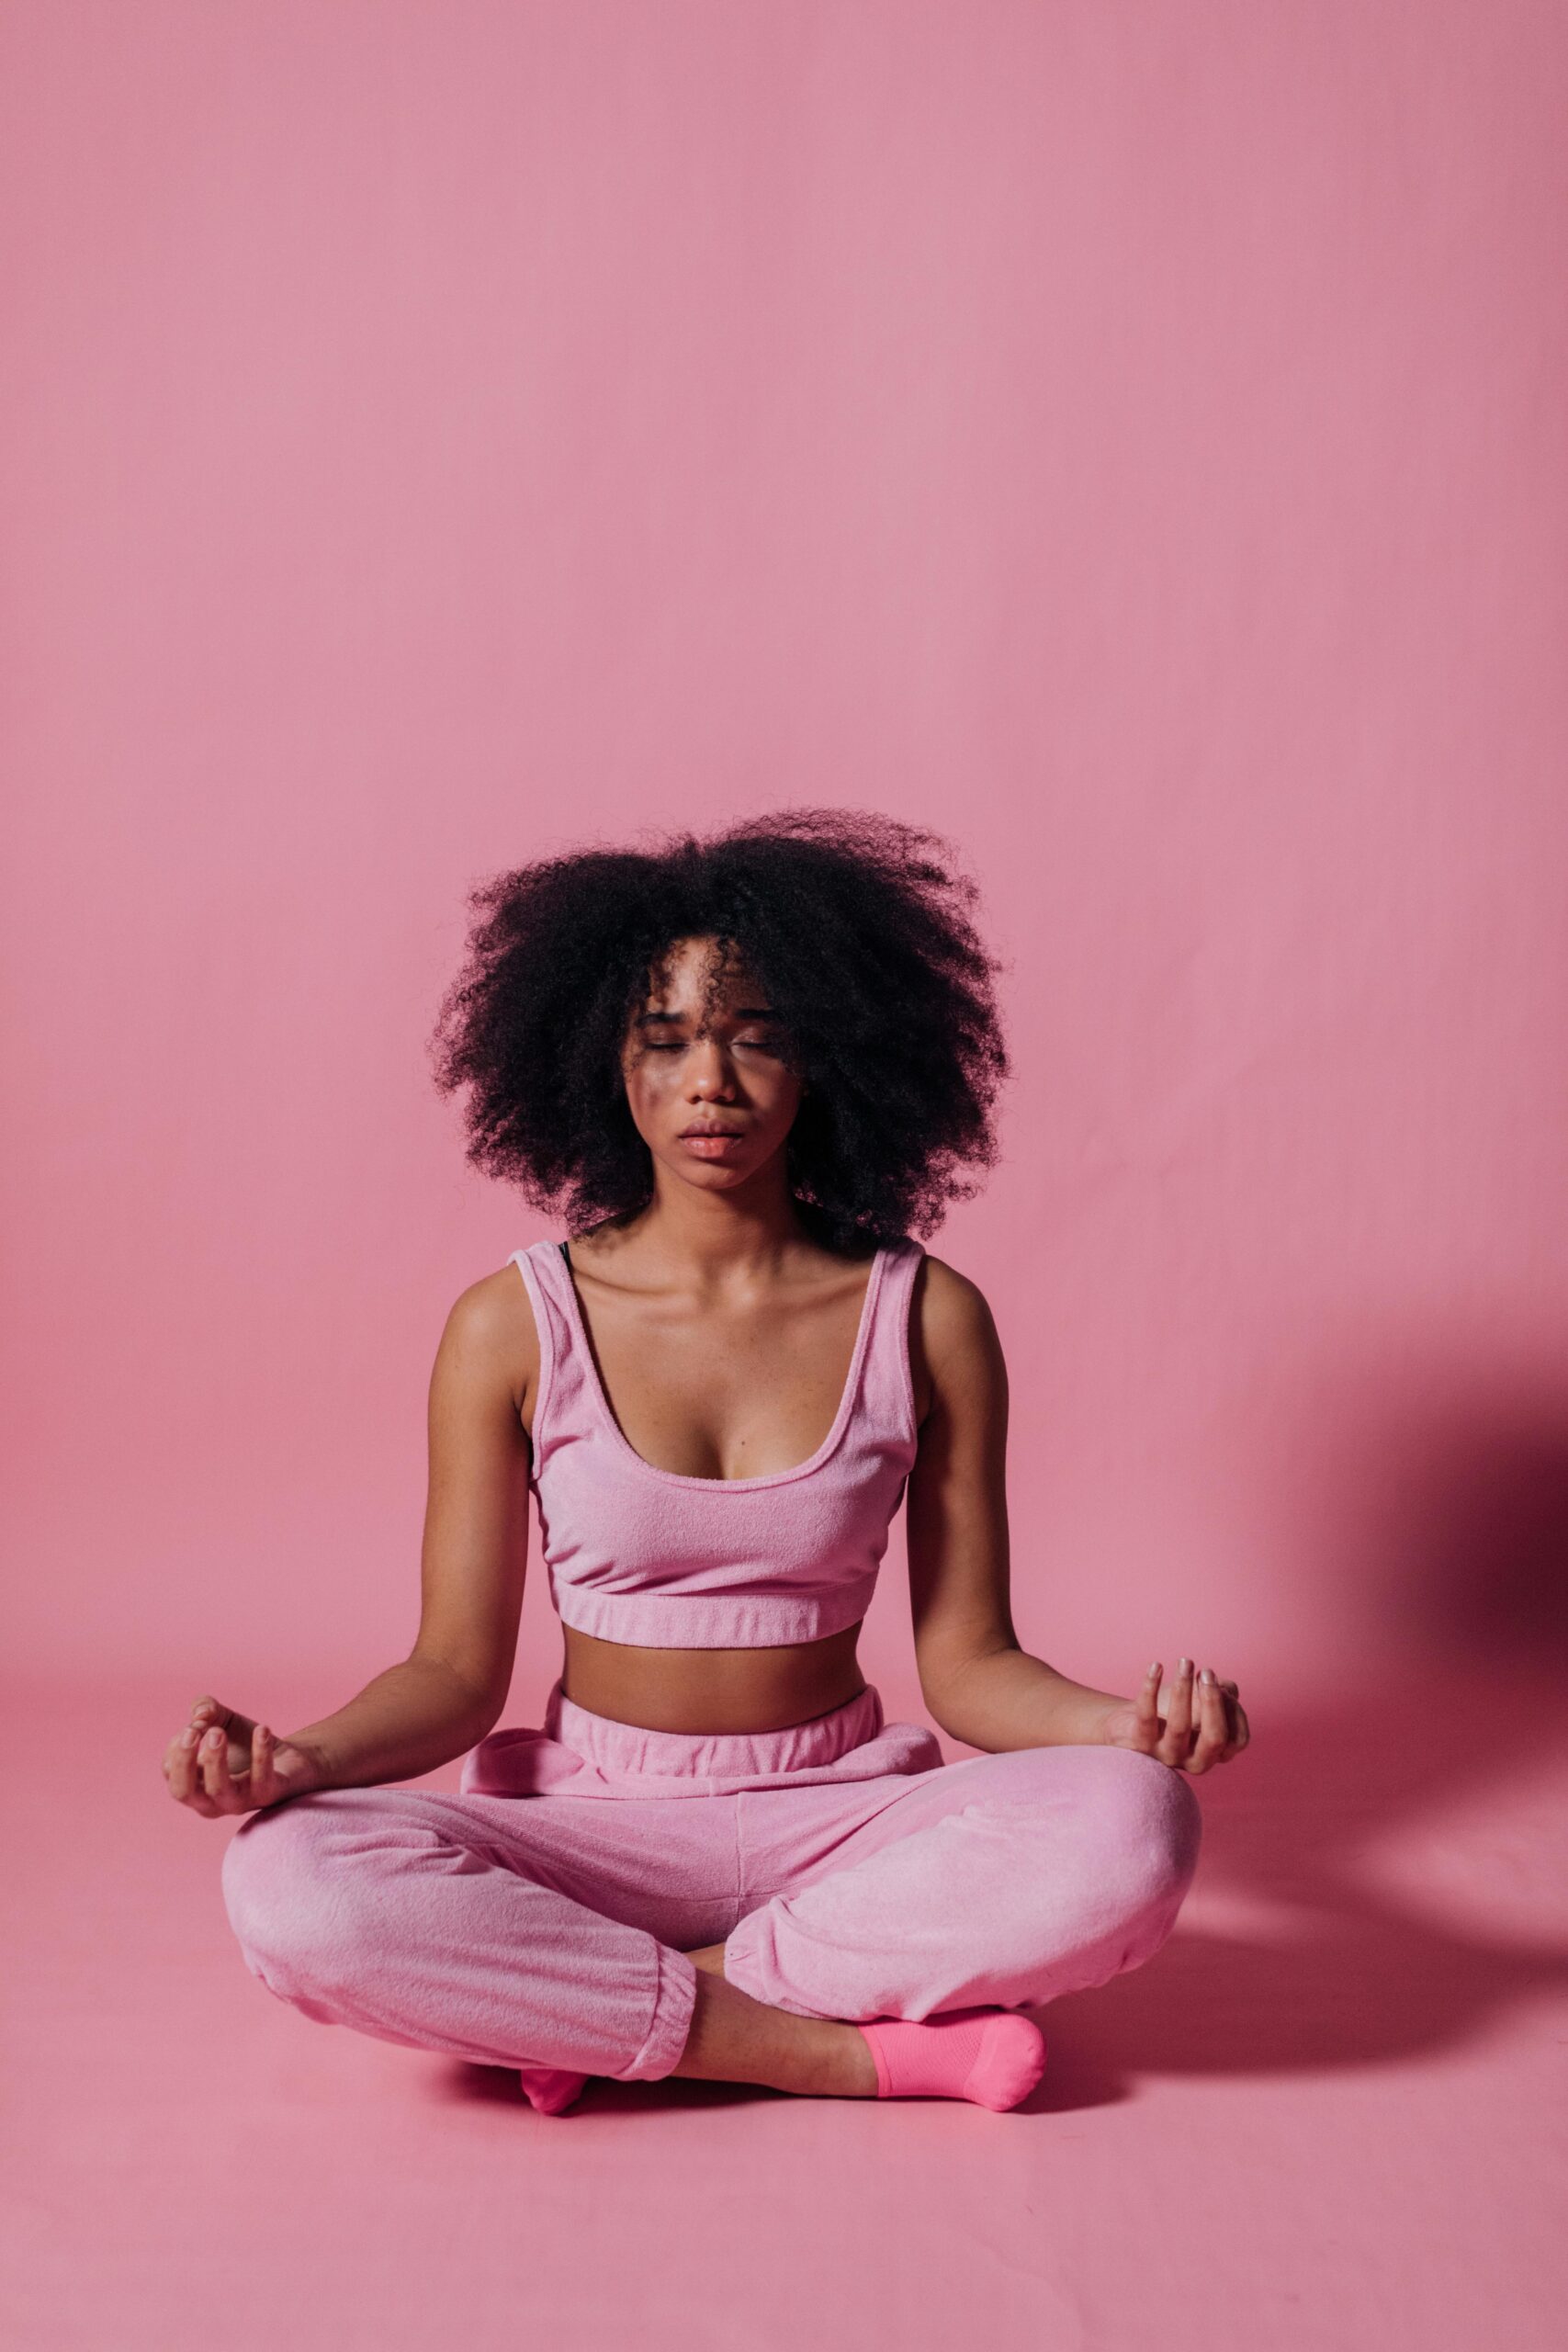 Photo by KoolShooters : https://www.pexels.com/photo/woman-in-pink-crop-top-and-jogging-pants-practicing-yoga-7346634/